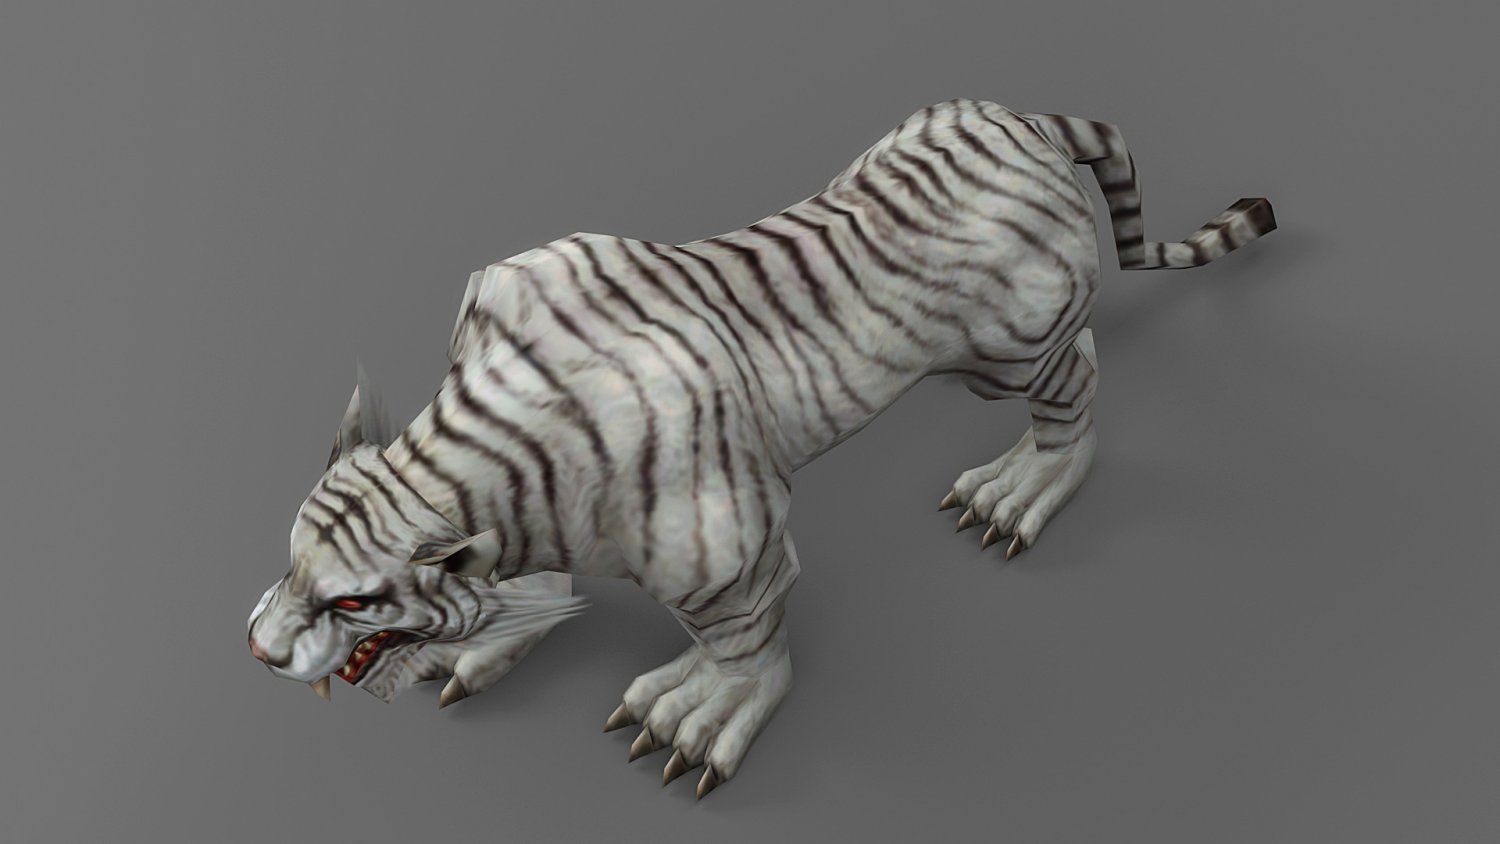 Tiger Animated 3D Model $39 - .3ds .dae .dxf .pwc .obj .stl .wrl .max .fbx  - Free3D